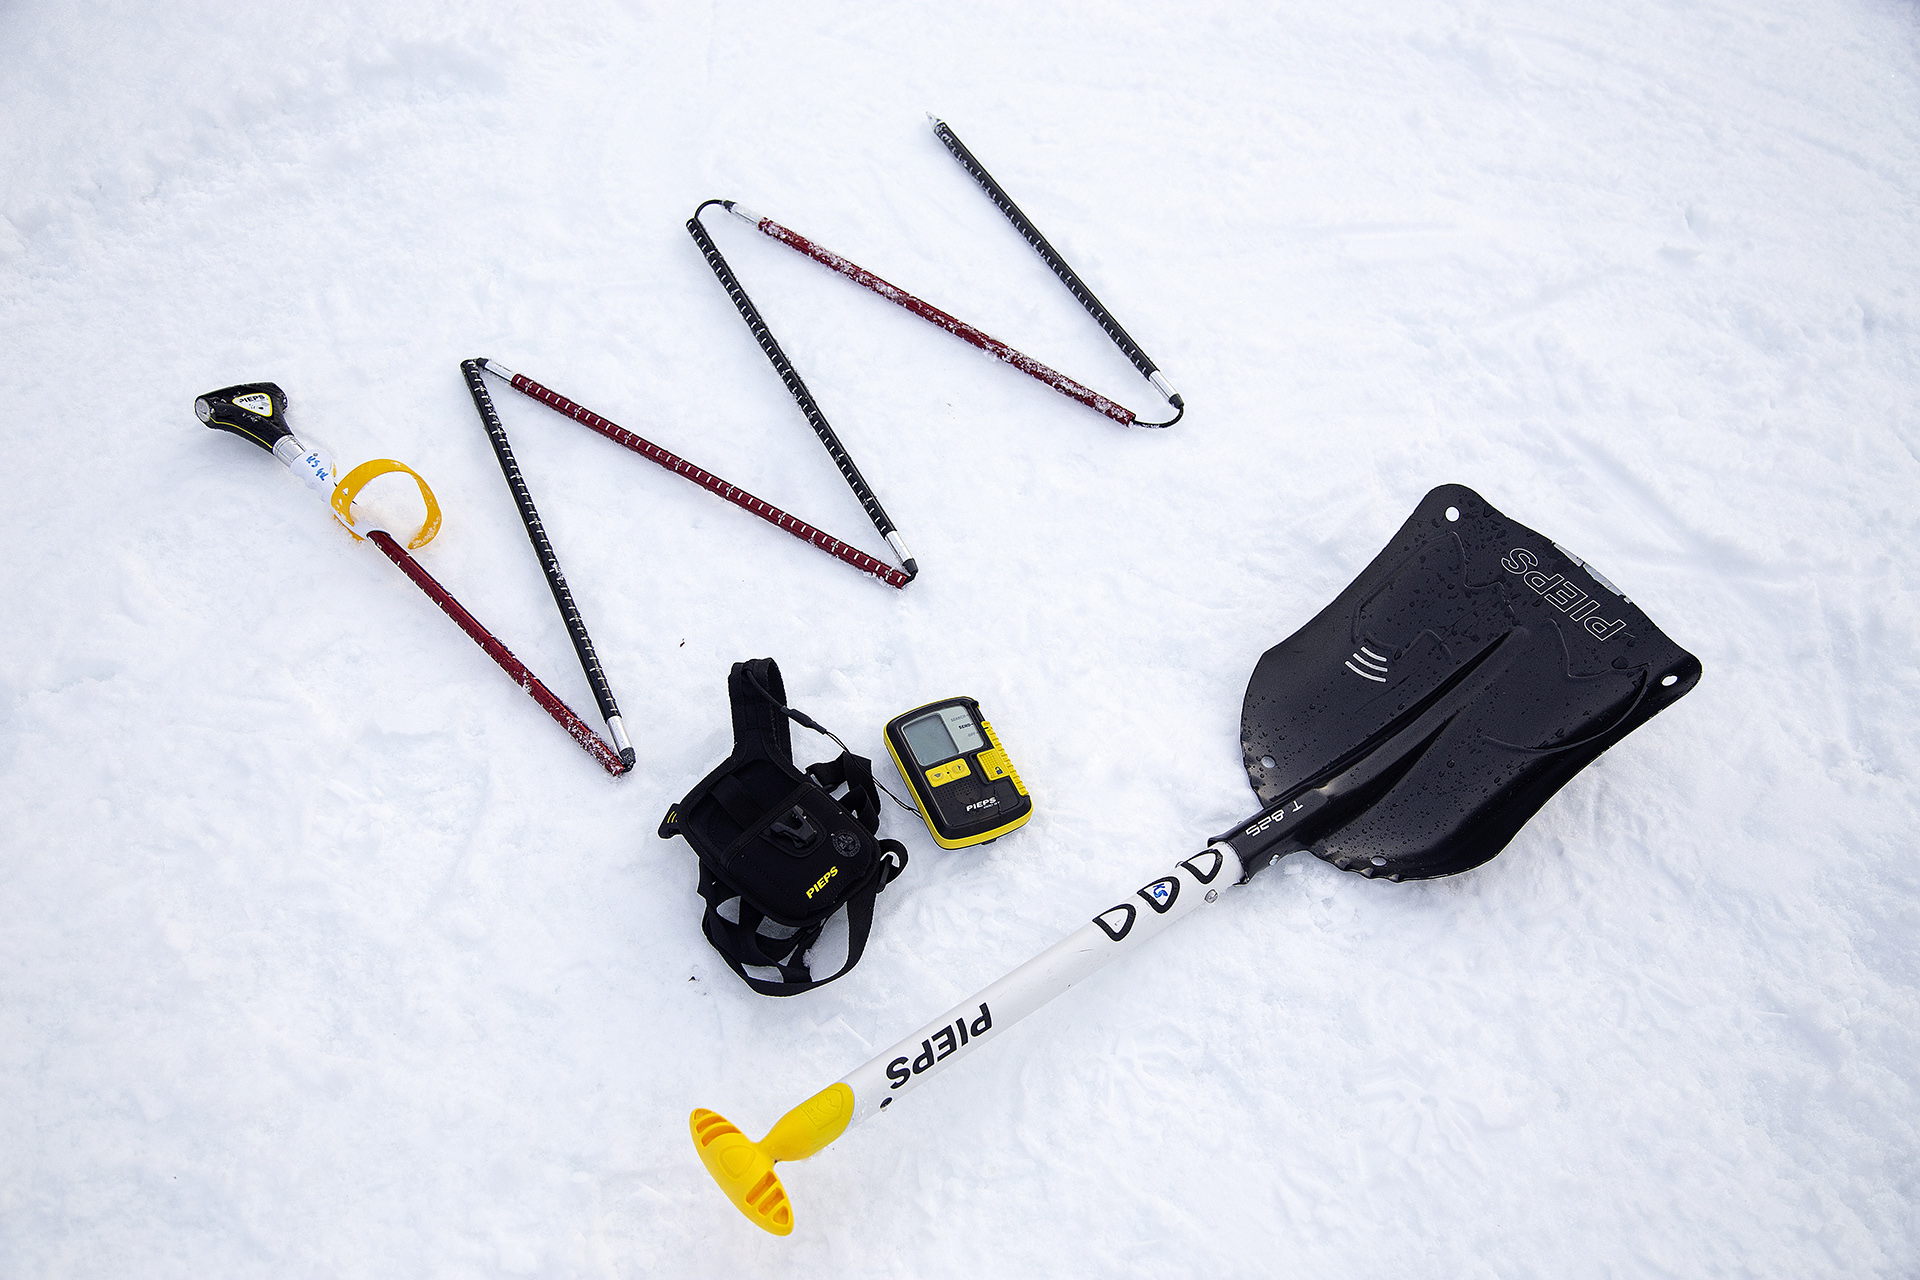 Pieps Avalanche Rescue Kit with Beacon, Probe, & Shovel